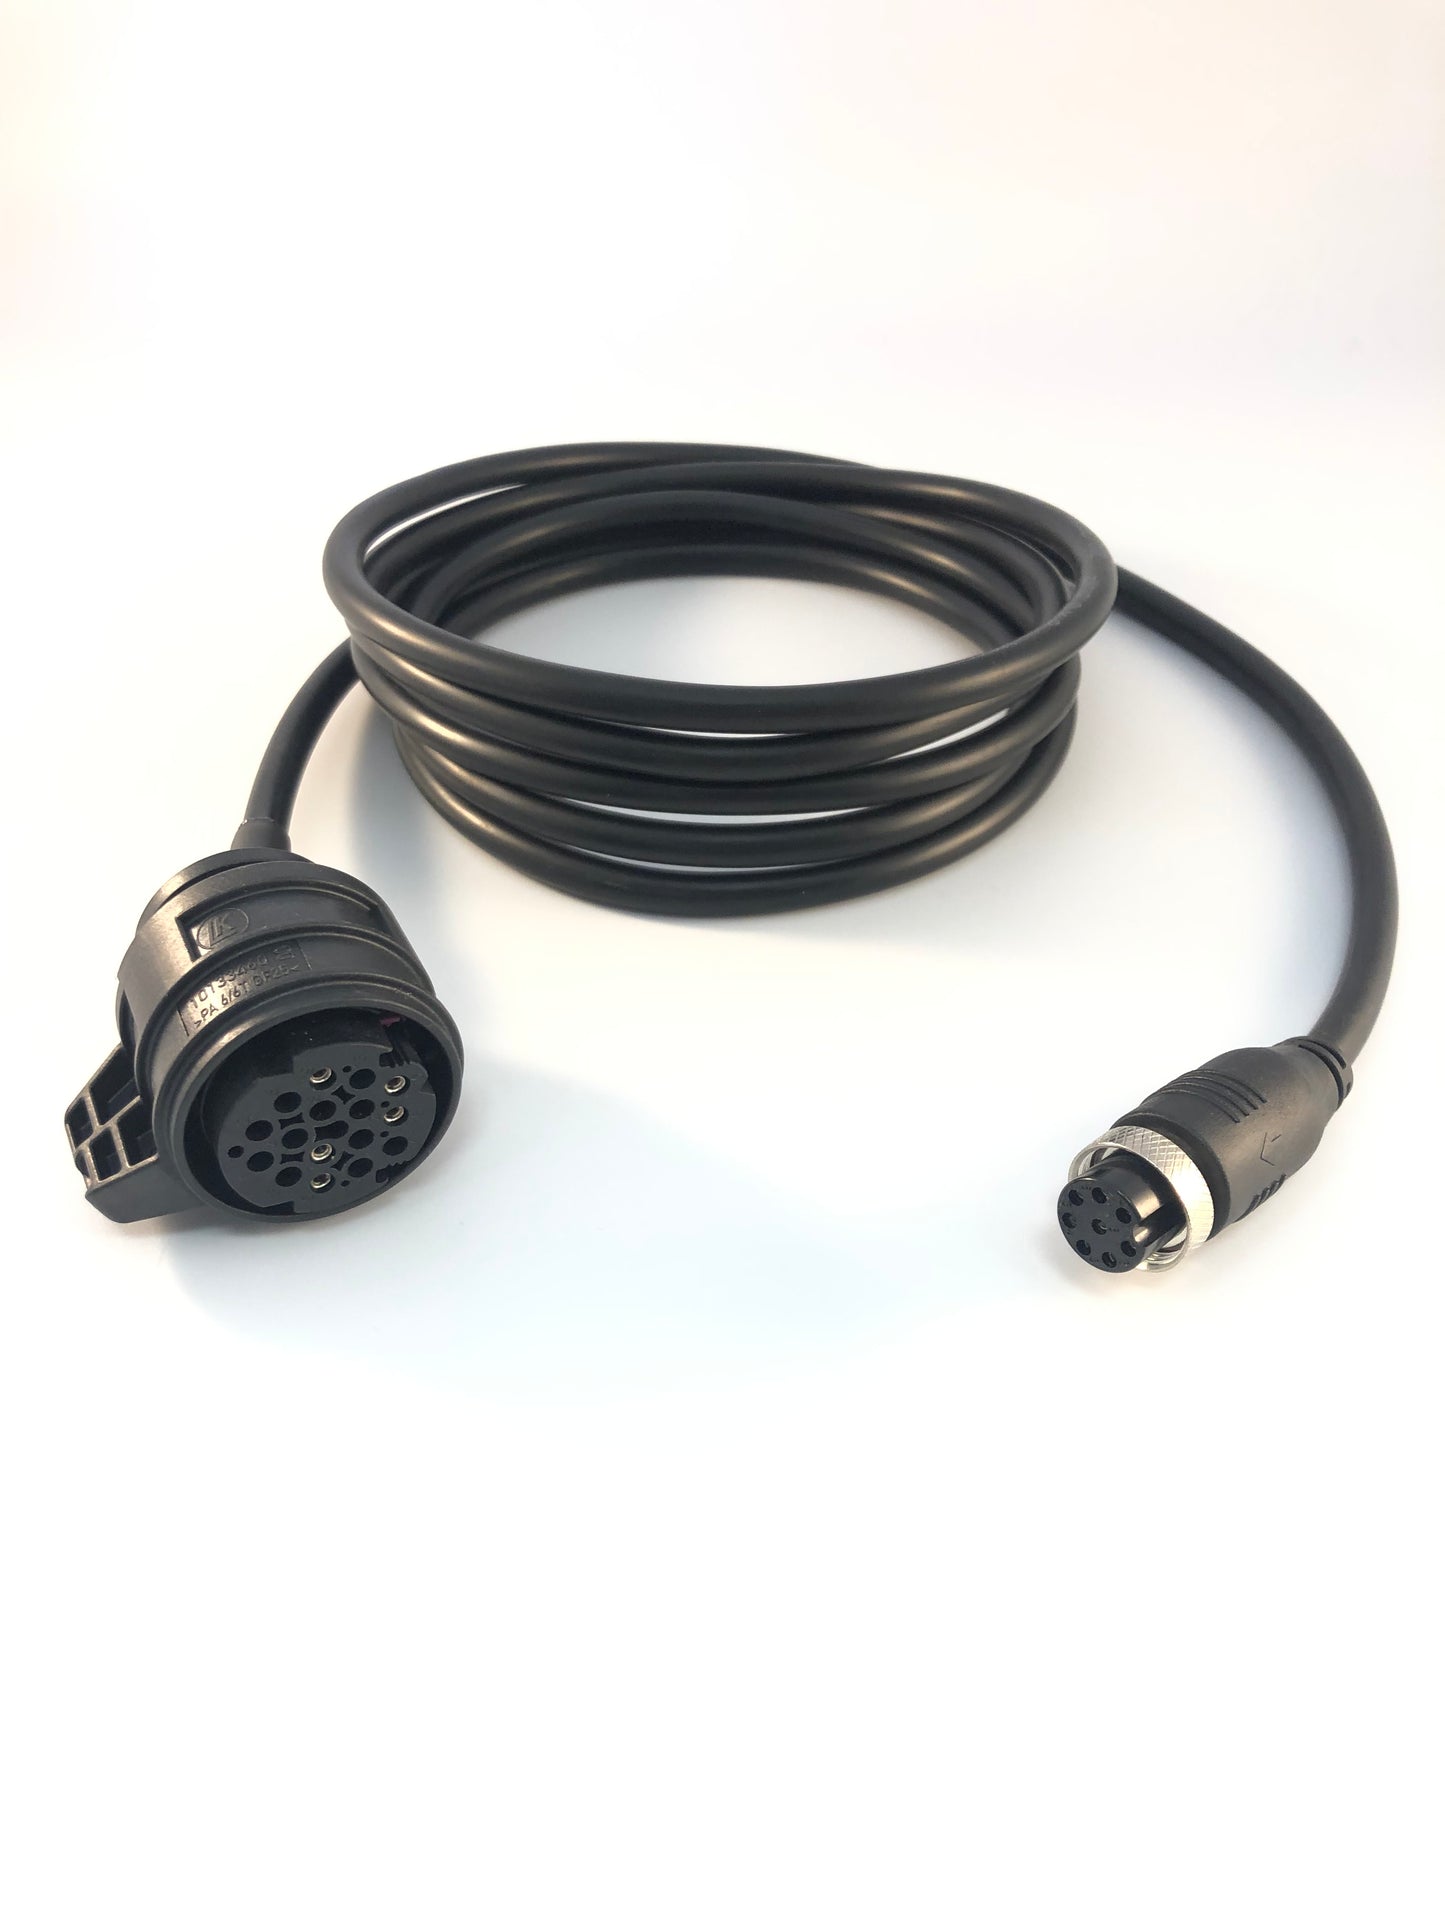 VAG DSG DQ380 DQ381 DQ500 Bench Cable Harness for TCU Programming, MMS Flex